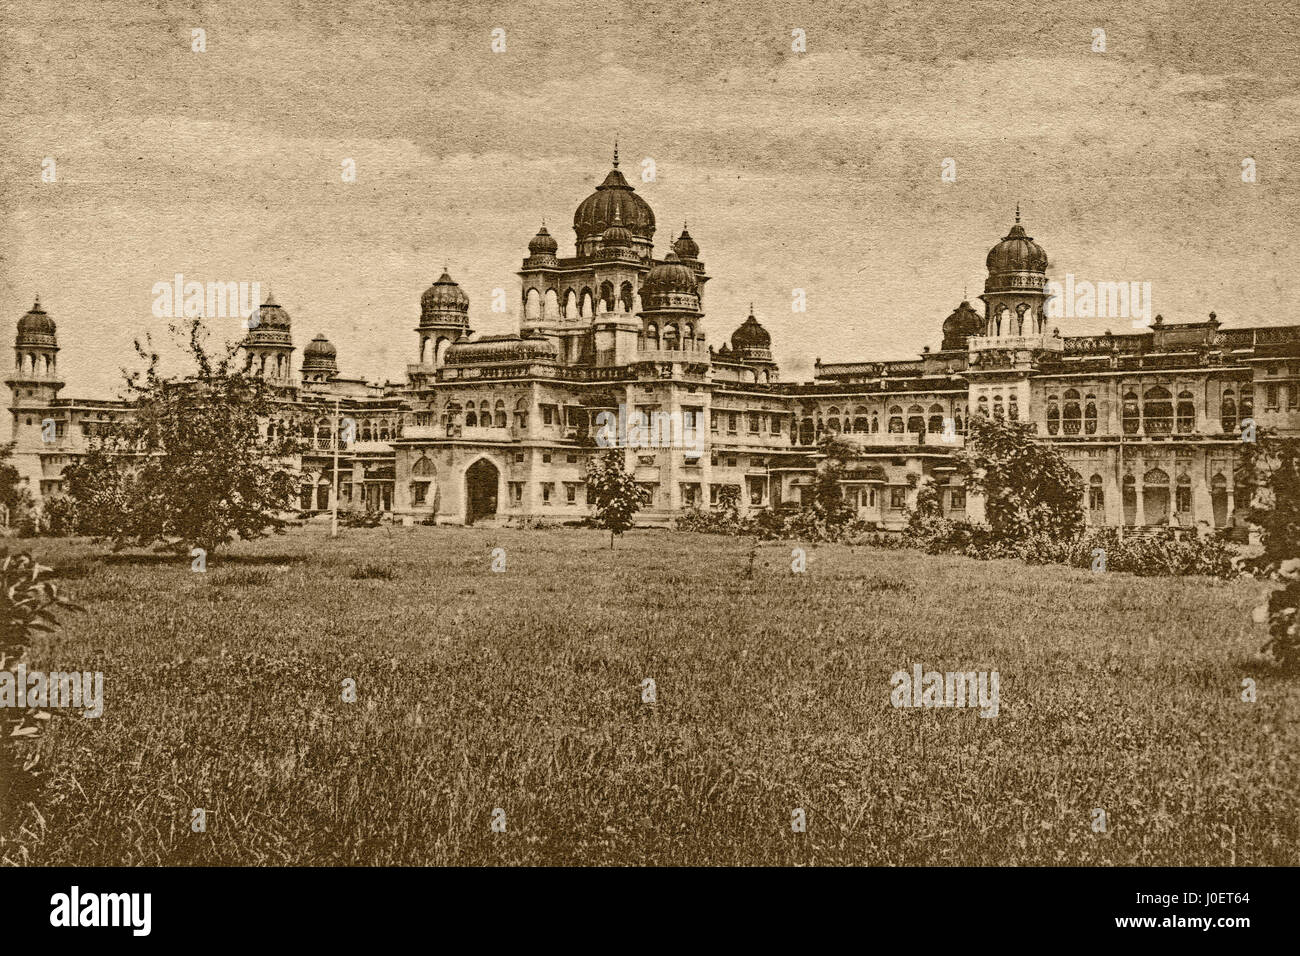 Vintage 1900s photo of king george medical college, lucknow, uttar pradesh, india, asia - AAD 252178 Stock Photo